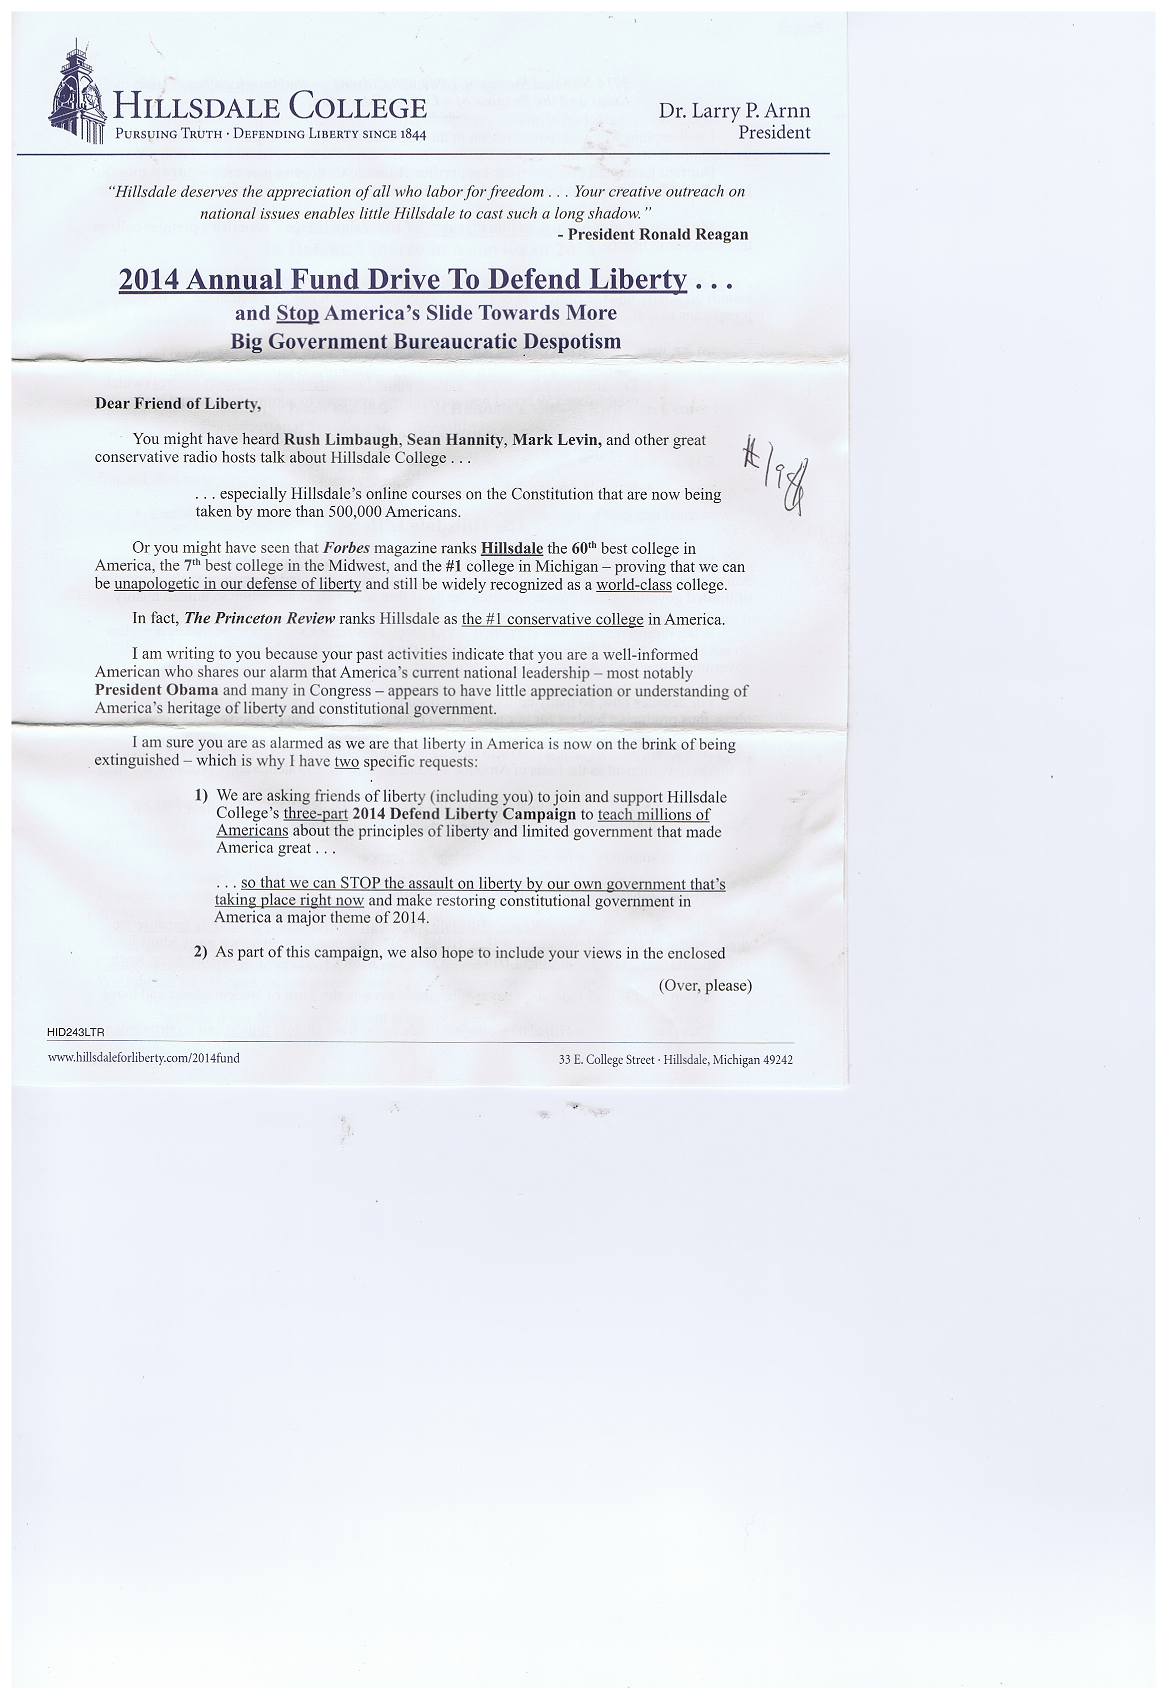 2013 Hillsdale College letter